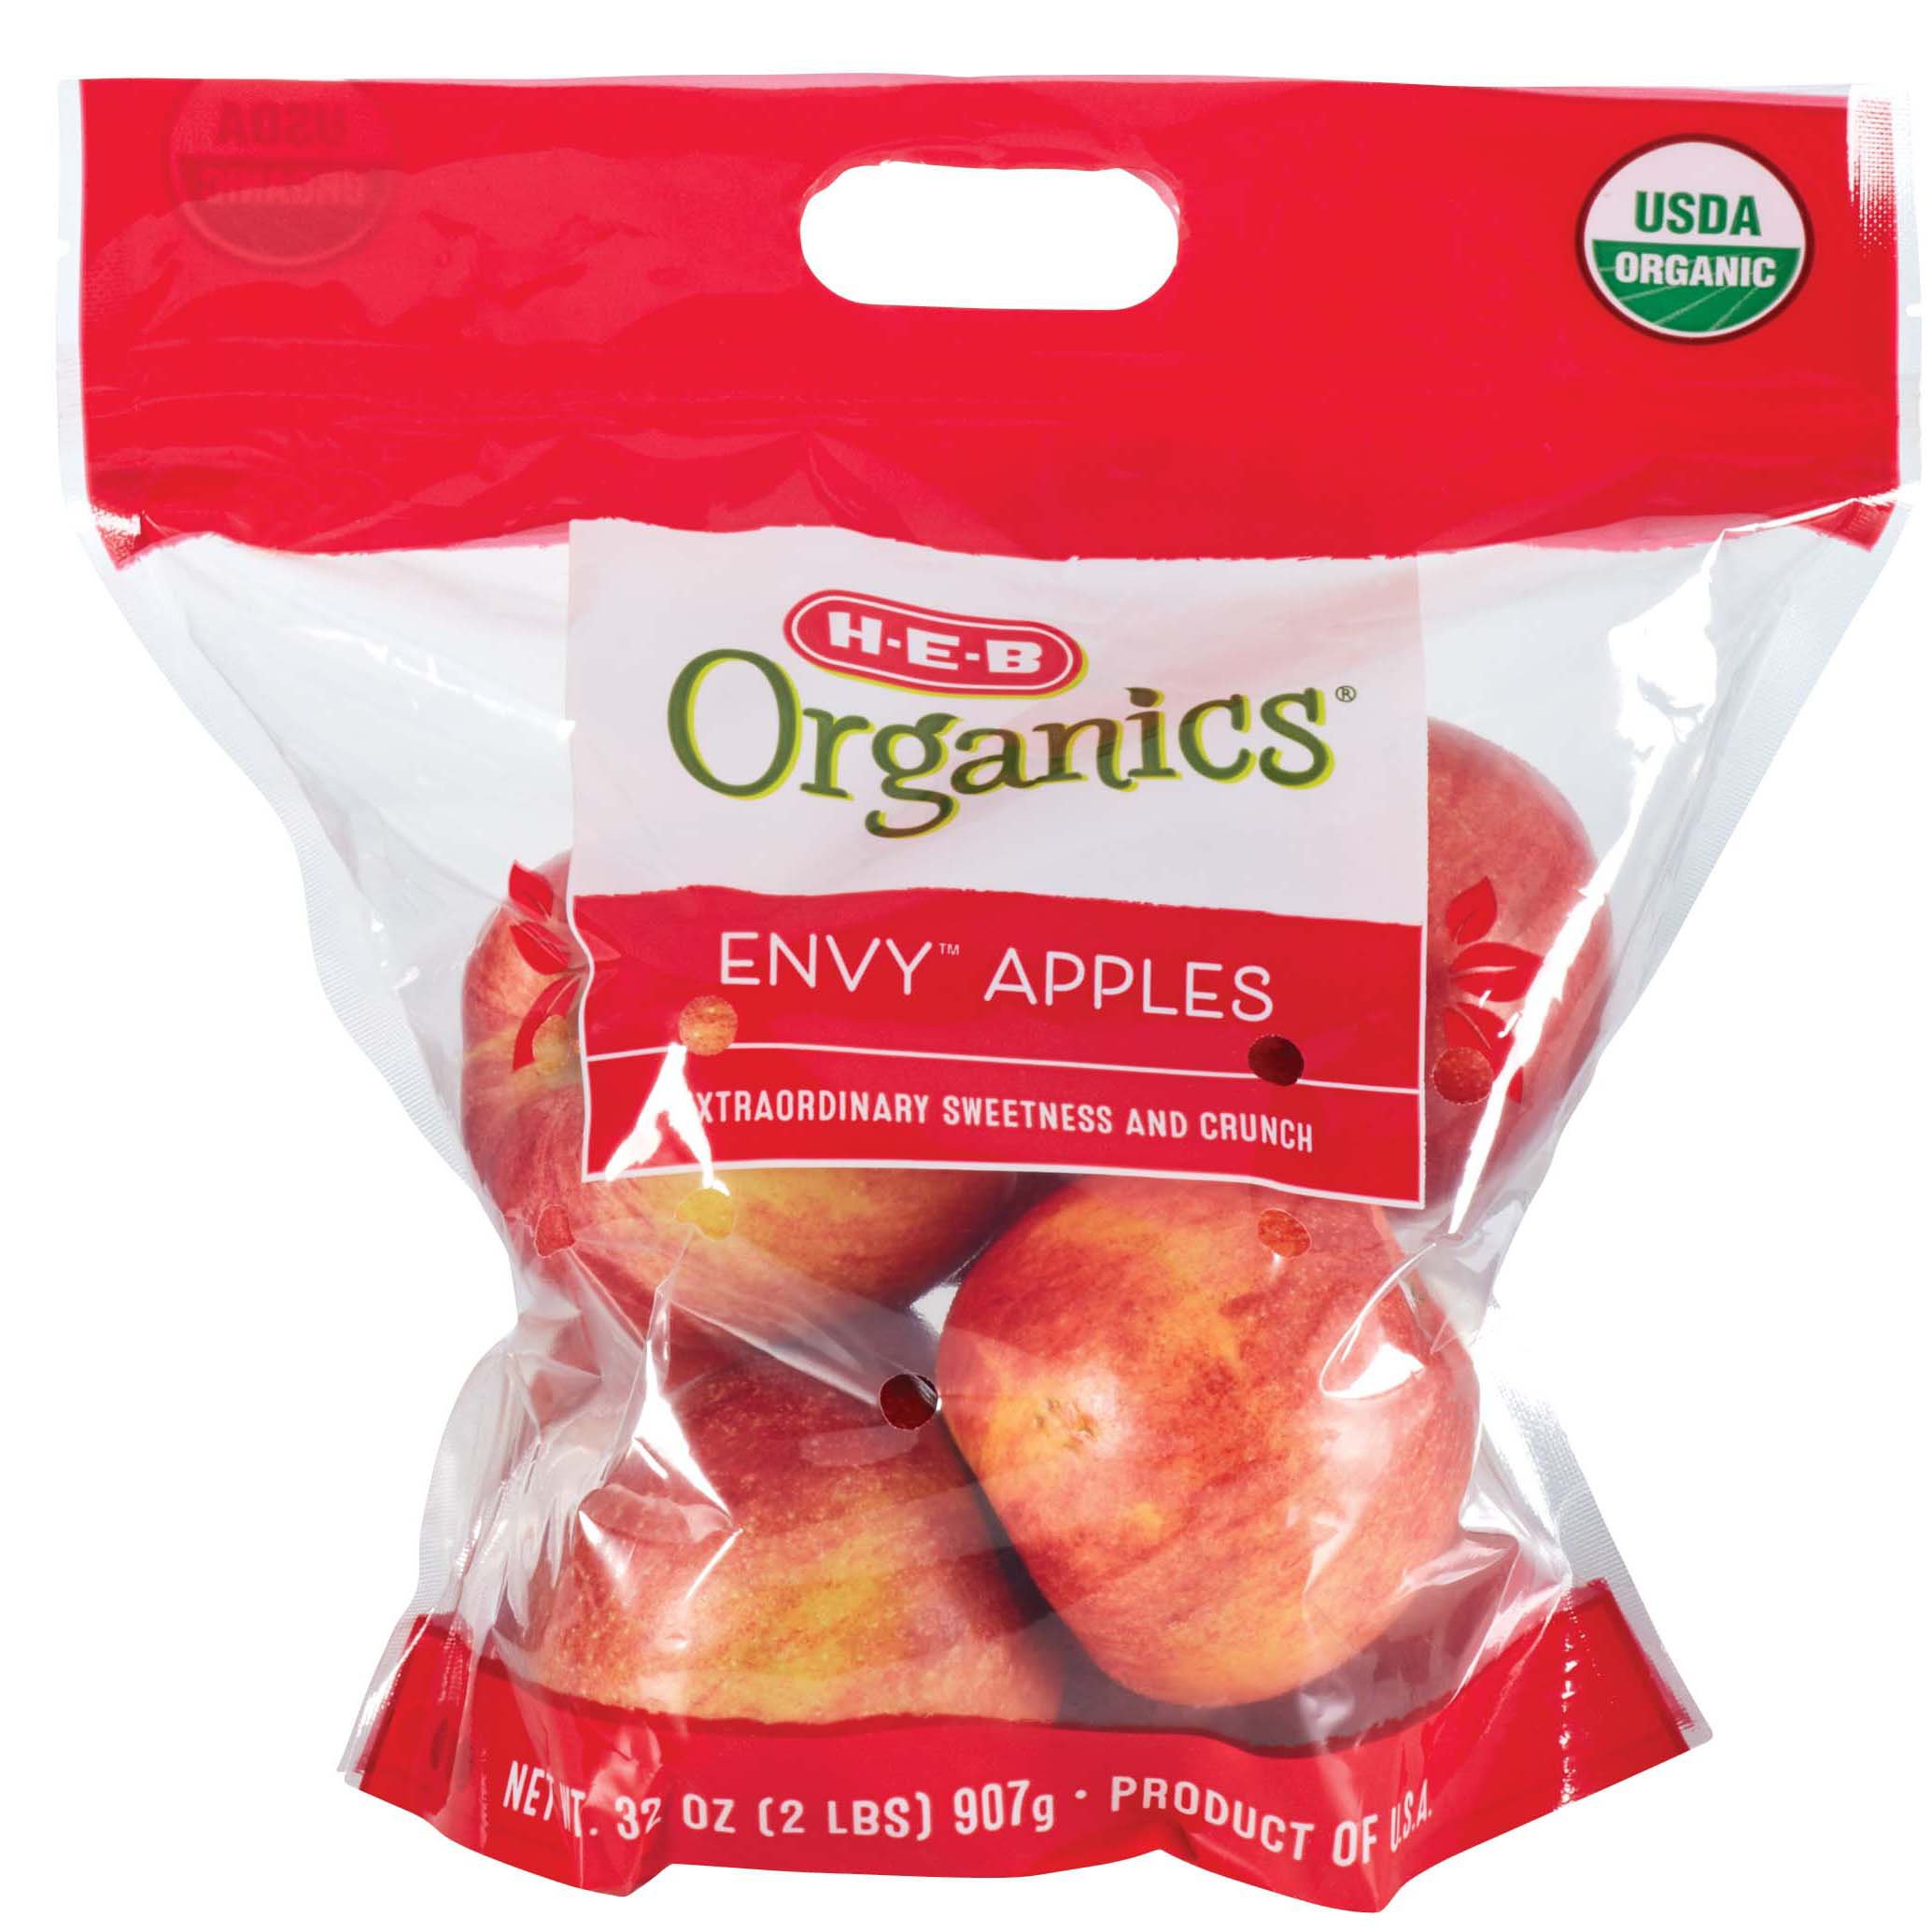 H-E-B Organics Fresh Kanzi Apples - Shop Apples at H-E-B